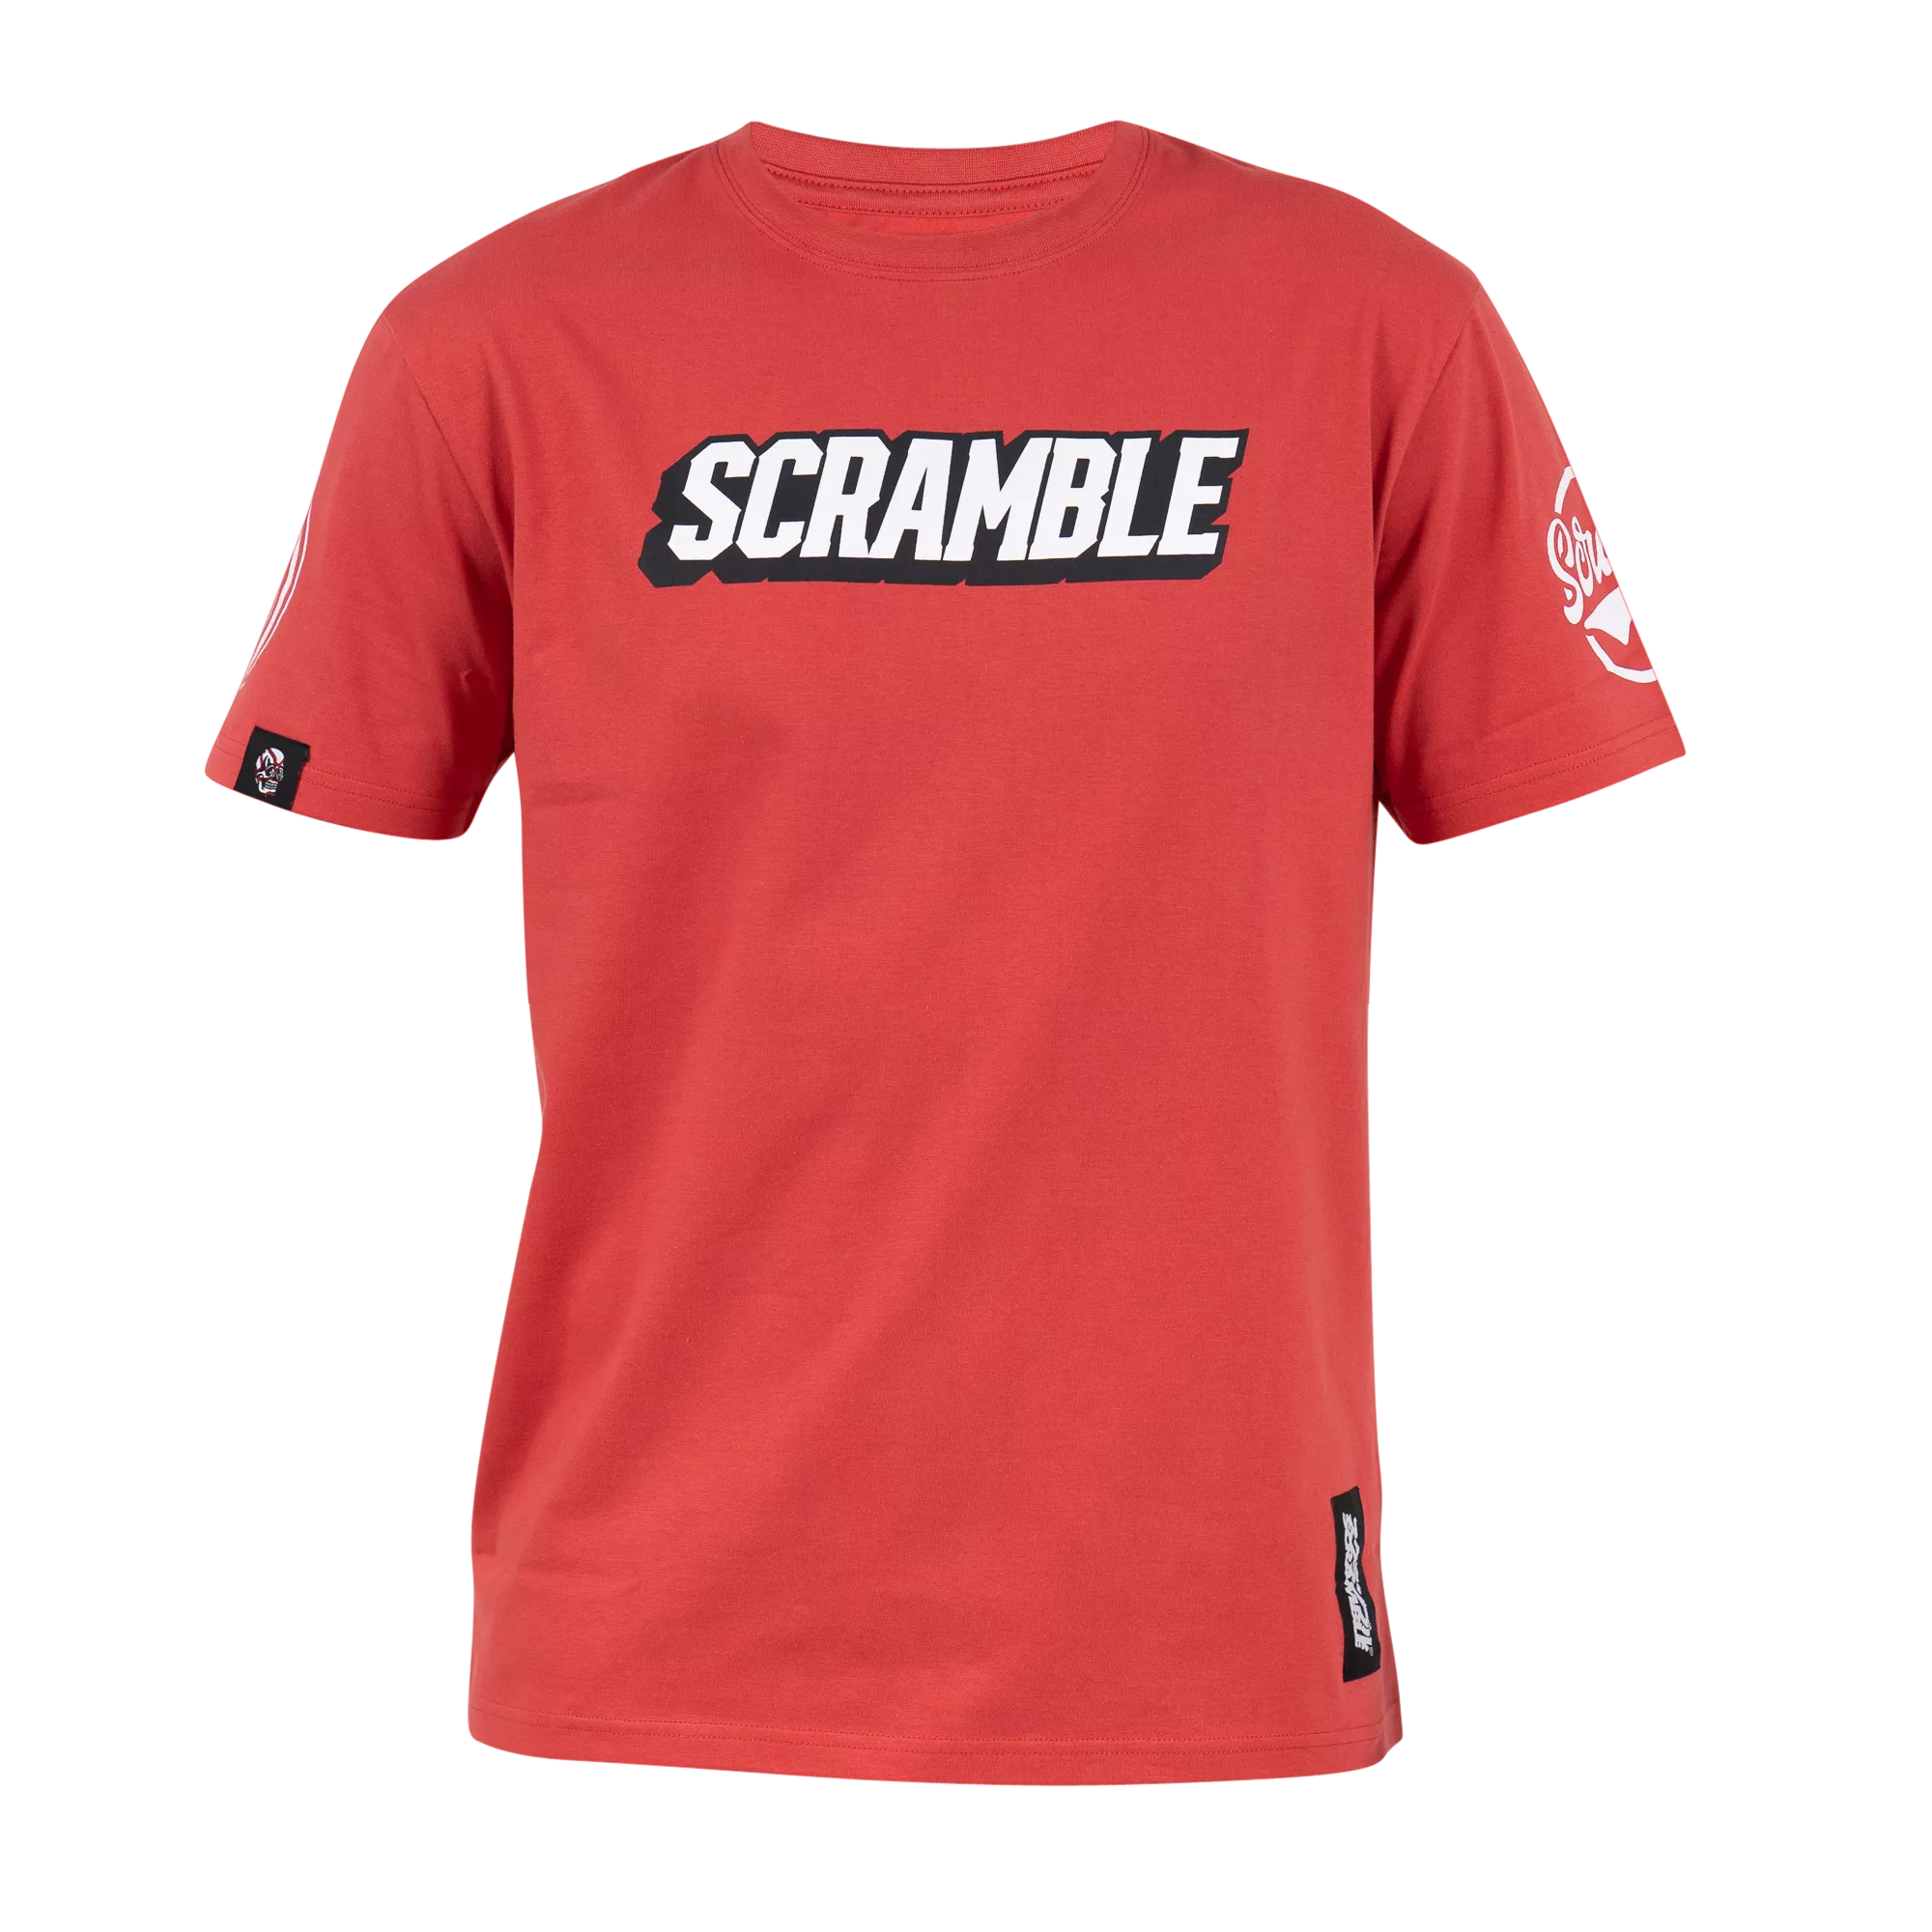 Scramble Sportif Tee - Red